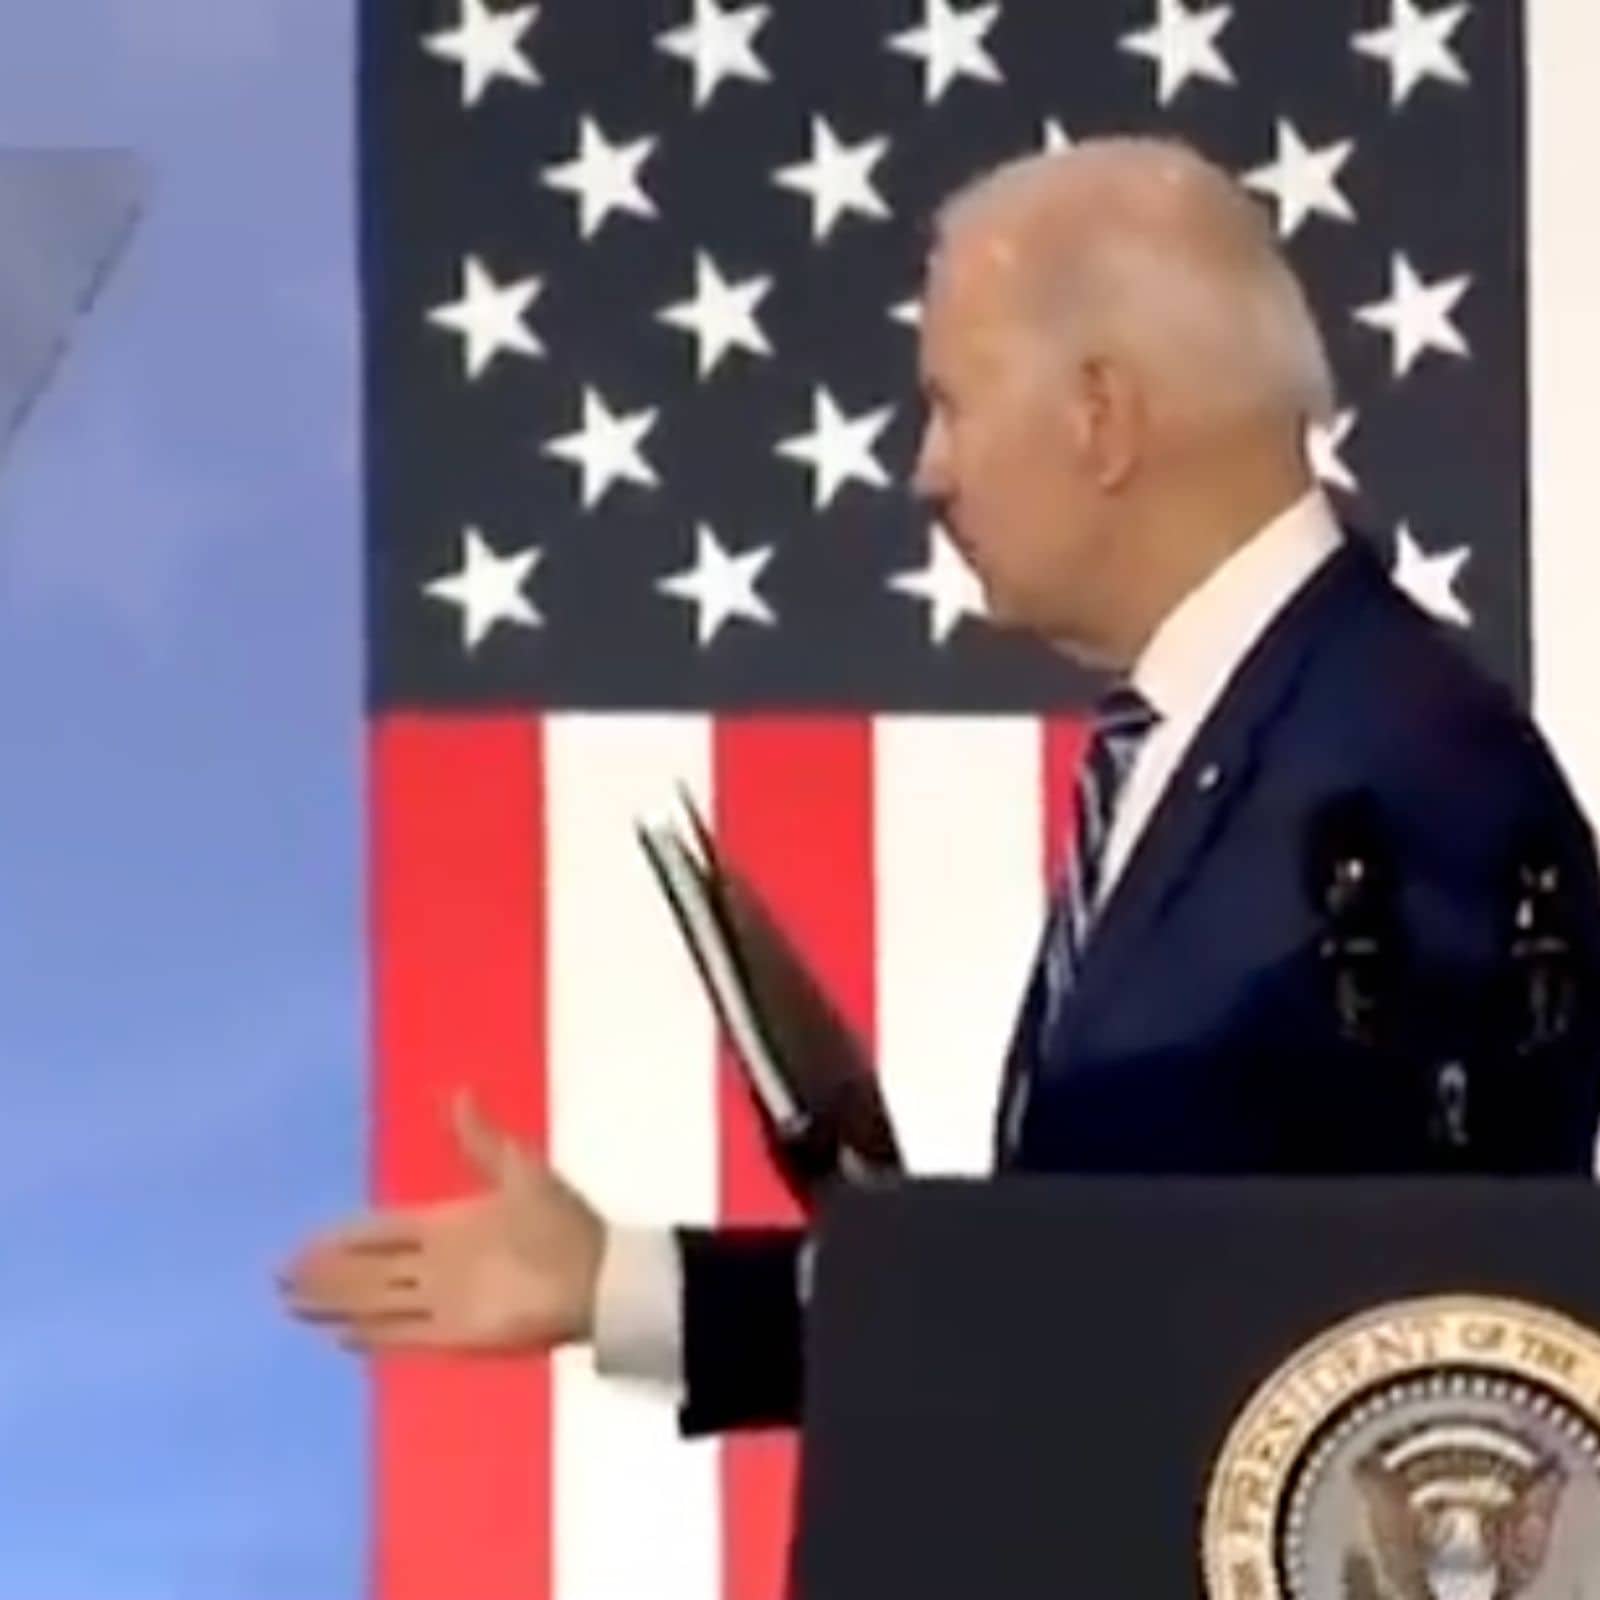 Joe Biden's awkward handshake in 'thin air' goes viral; Twitter